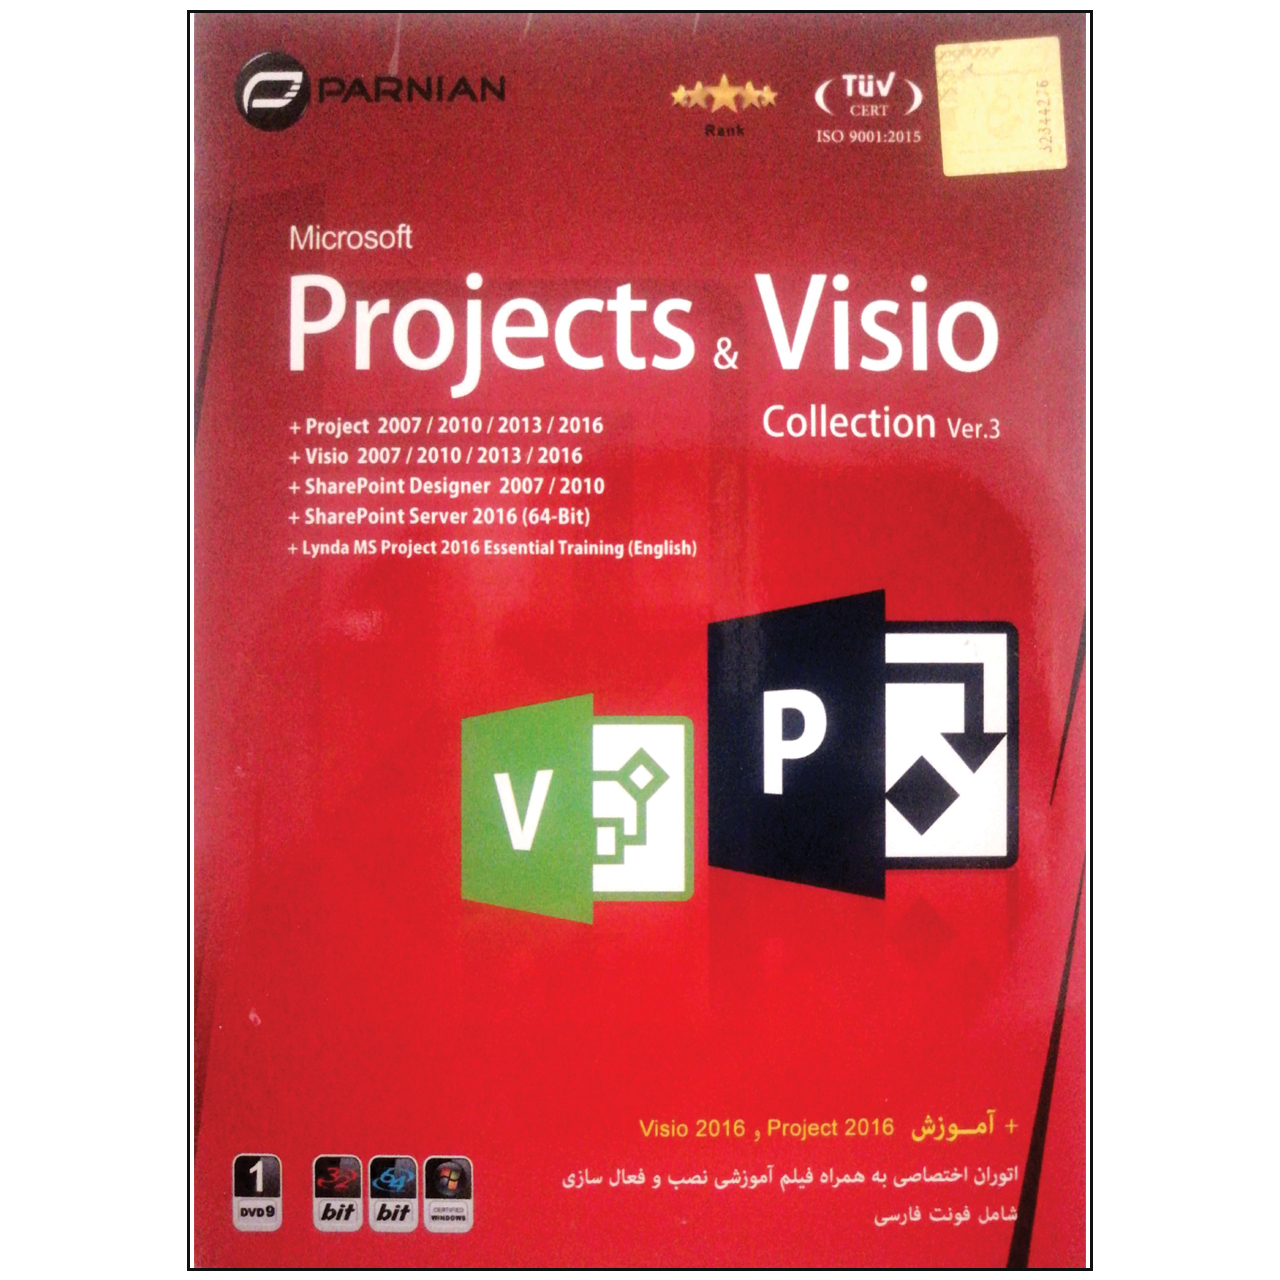 نرم افزار Project & Visio collection نشر پرنیان